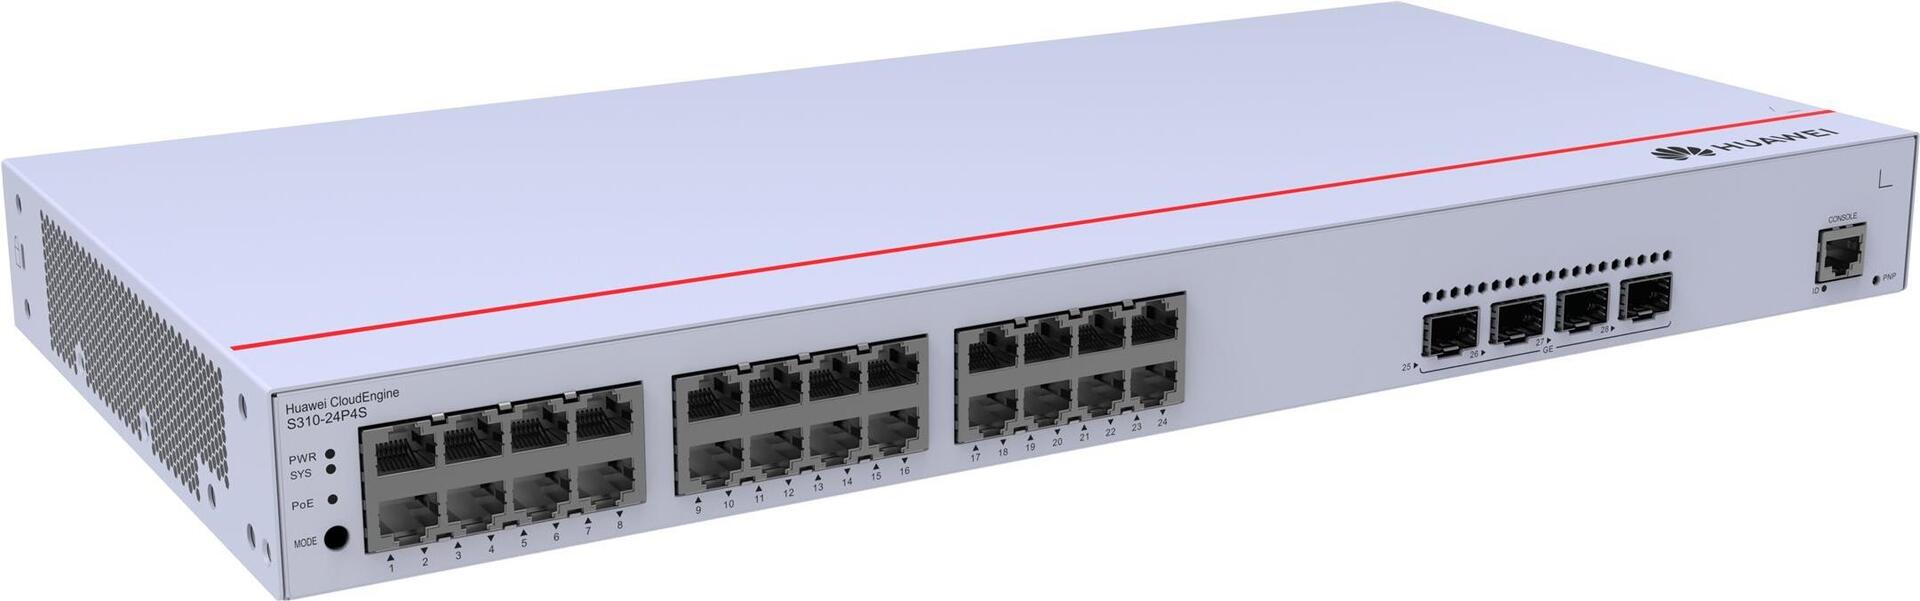 Huawei CloudEngine S310-24P4S Gigabit Ethernet (10/100/1000) Power over Ethernet (PoE) 1U Grau (98012201)